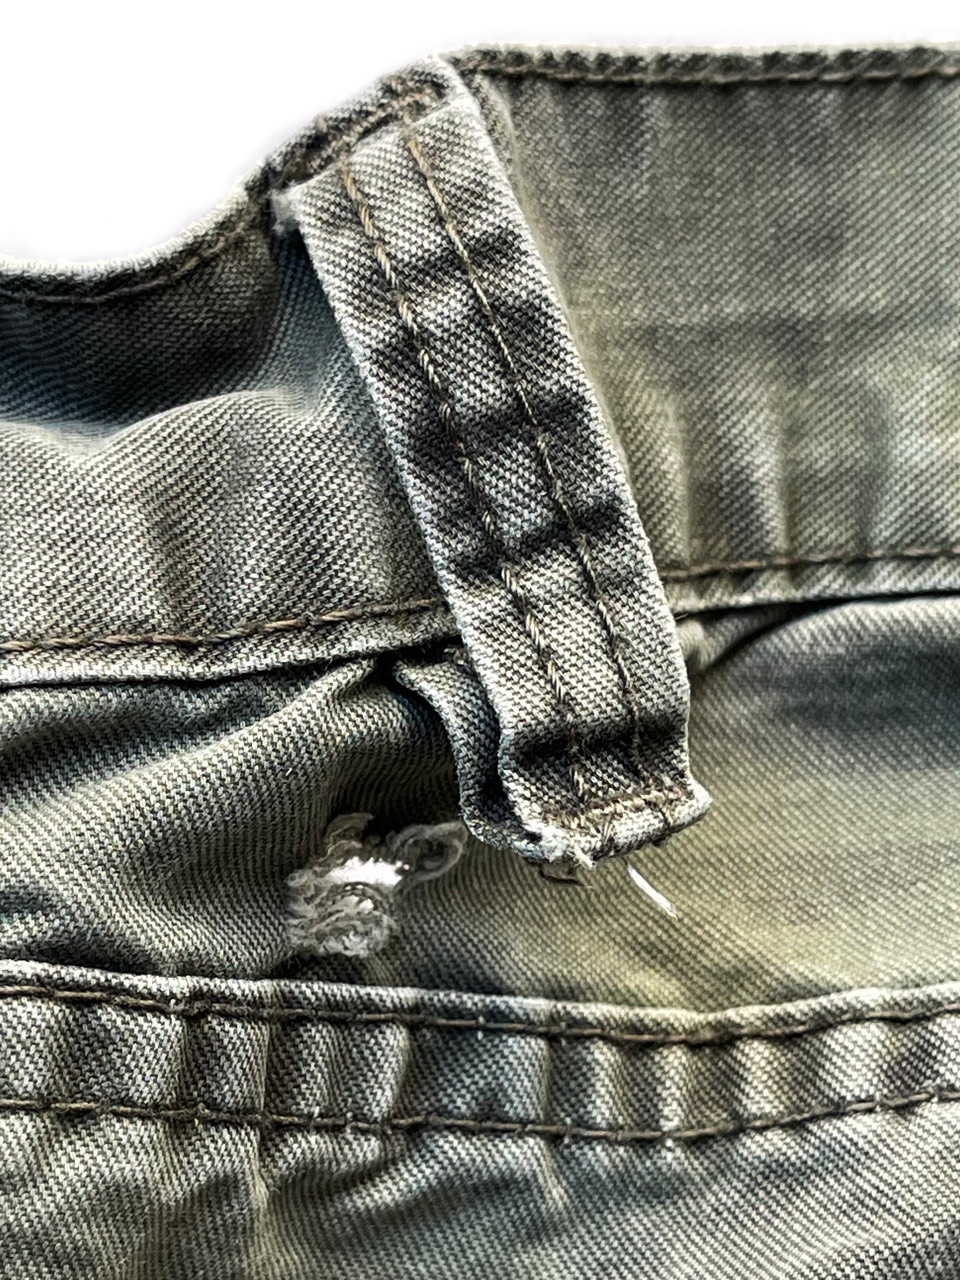 Dress pants cotton blend blue 36X29 4 pockets belt loops | Dress pants,  Cotton blend, Pocket belt